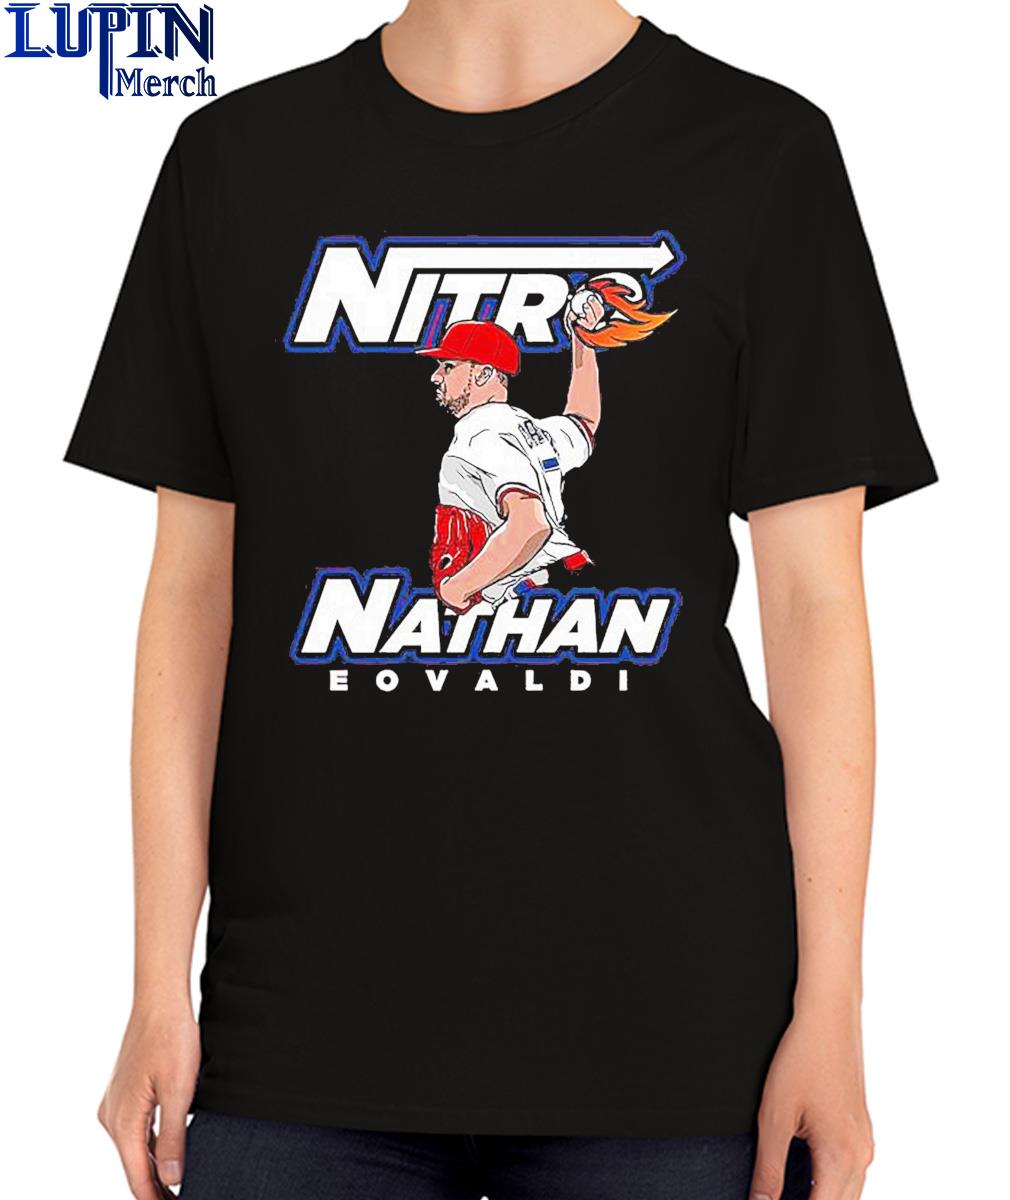 Nitro Nathan Eovaldi Texas Rangers Shirt, hoodie, sweater, long